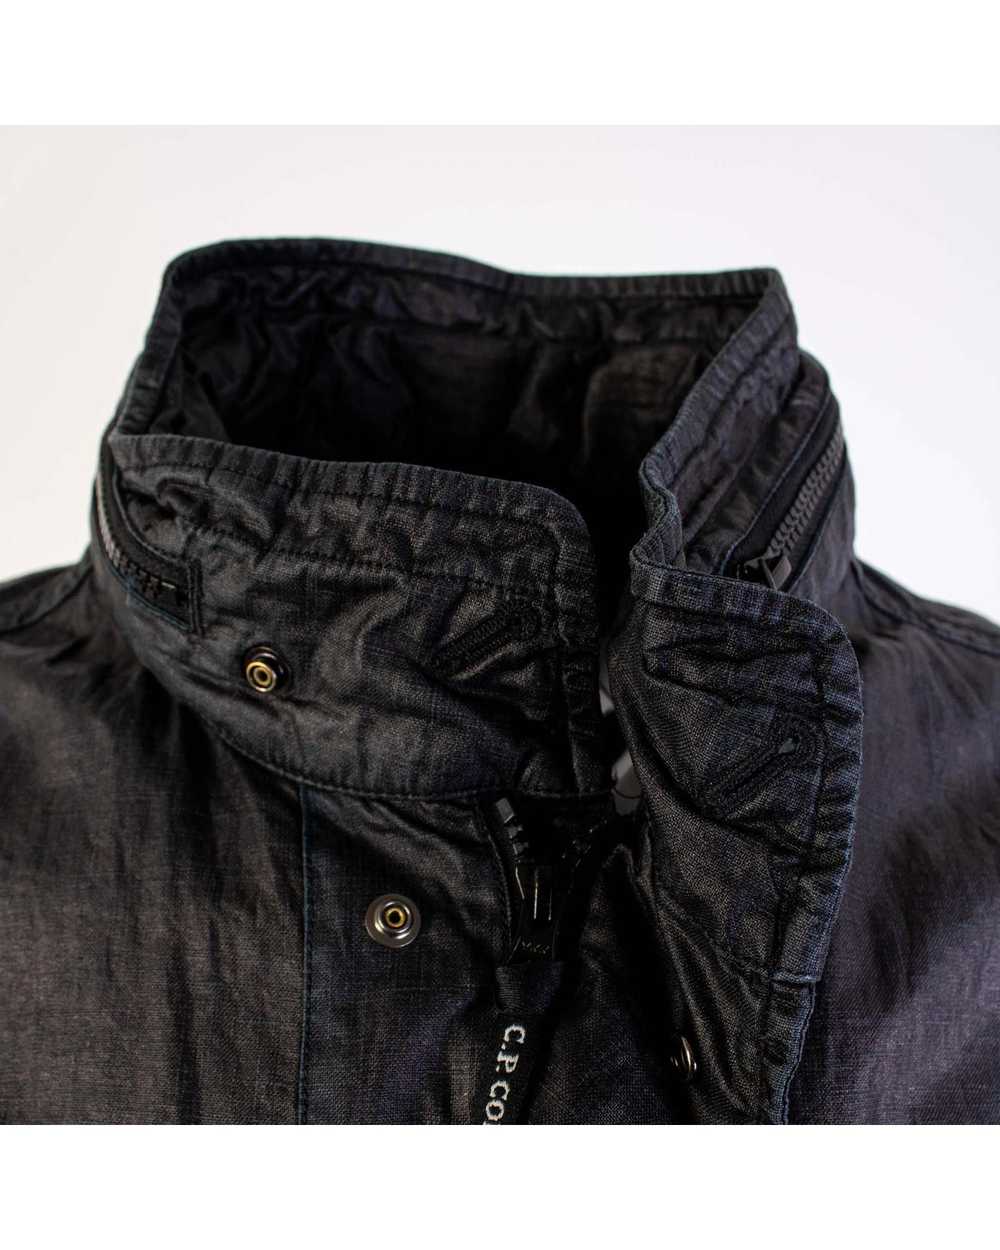 C.P. Company Wax Effect Overshirt Jacket - image 5